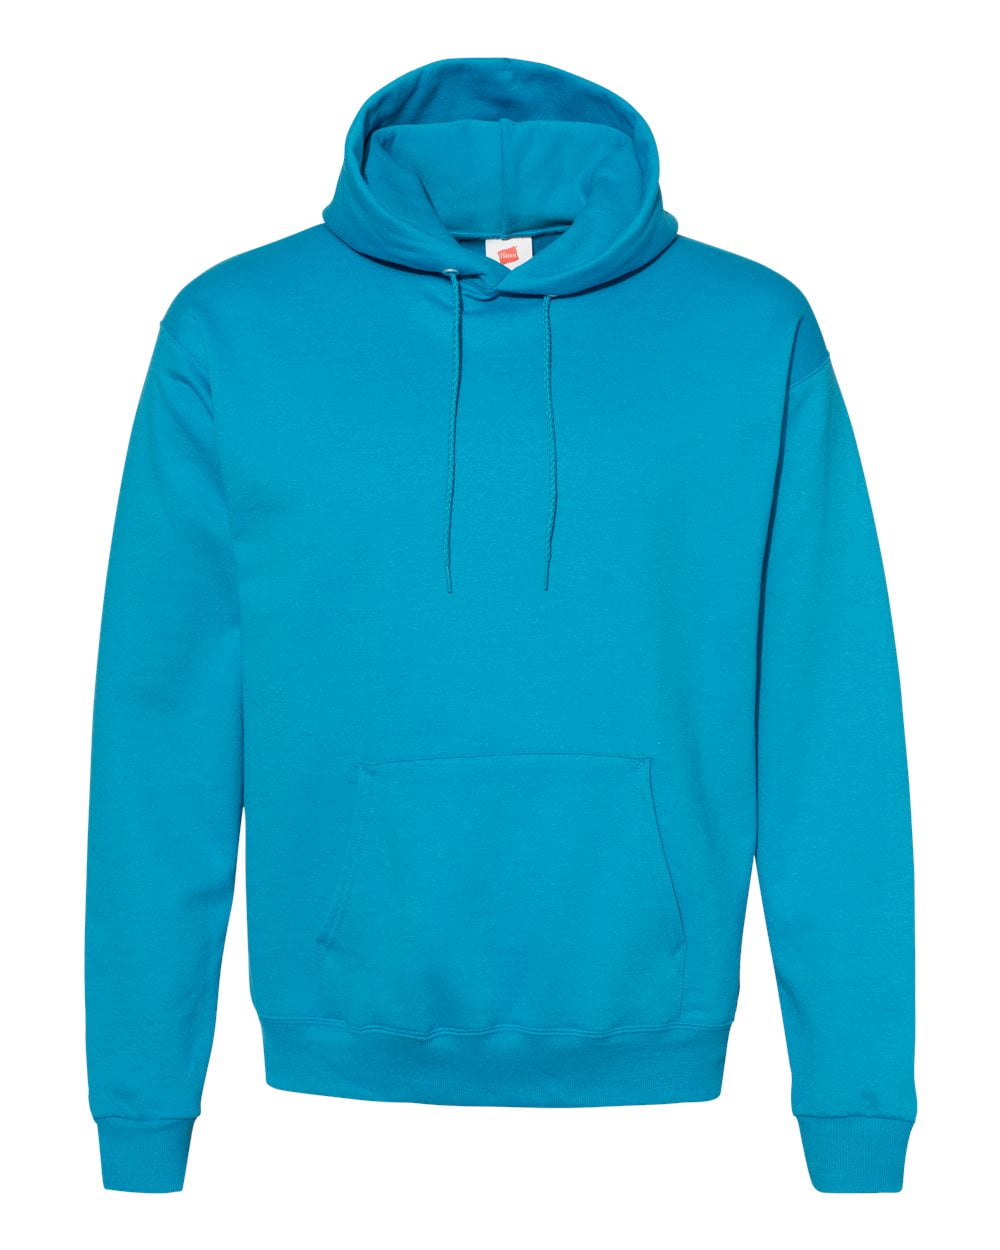 Hanes - MF Men - Ecosmart® Hooded Sweatshirt - Walmart.com